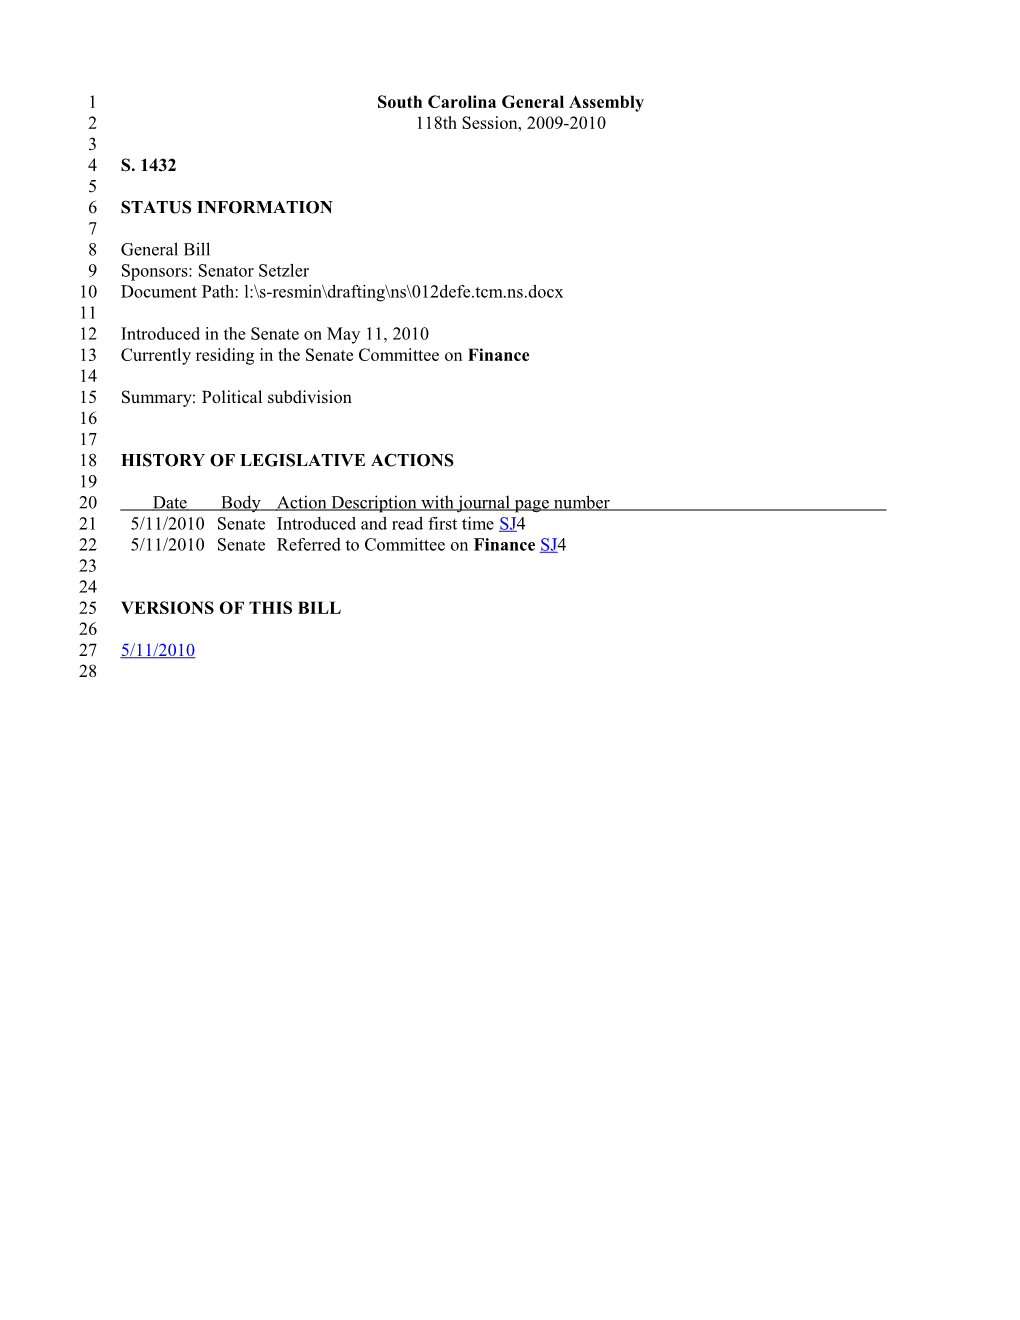 2009-2010 Bill 1432: Political Subdivision - South Carolina Legislature Online